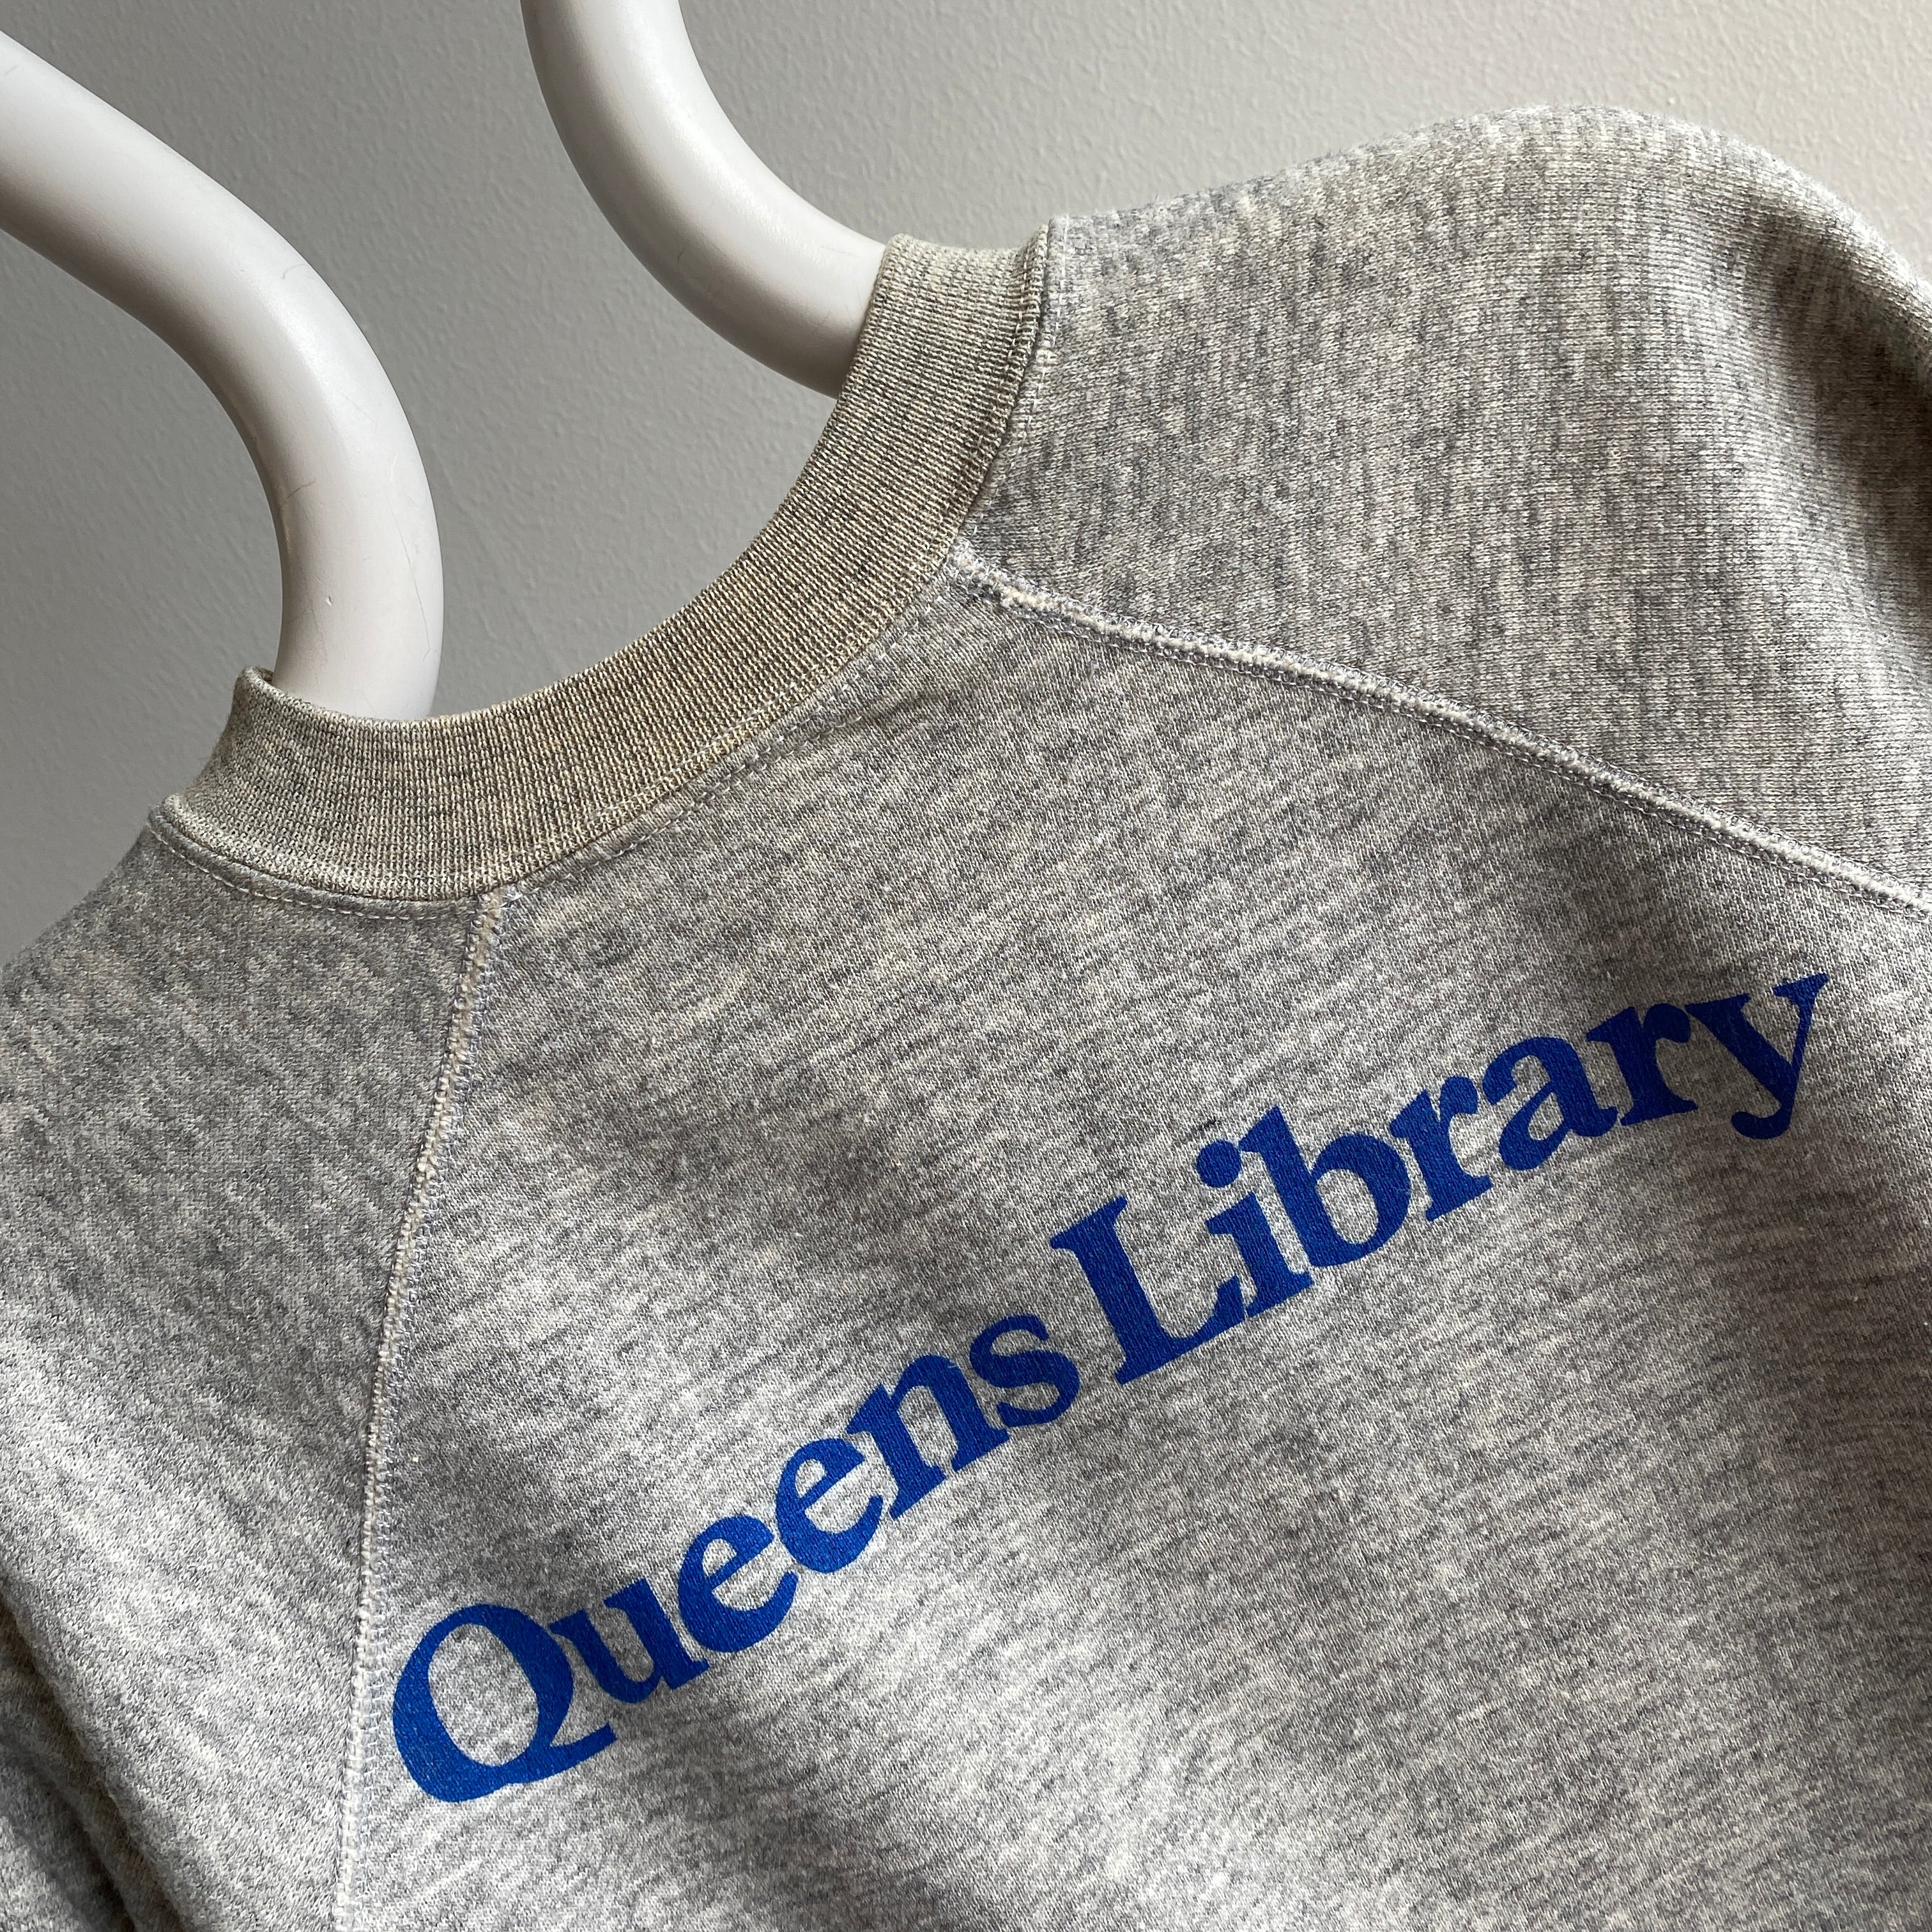 Sweat-shirt Queens Library des années 1970